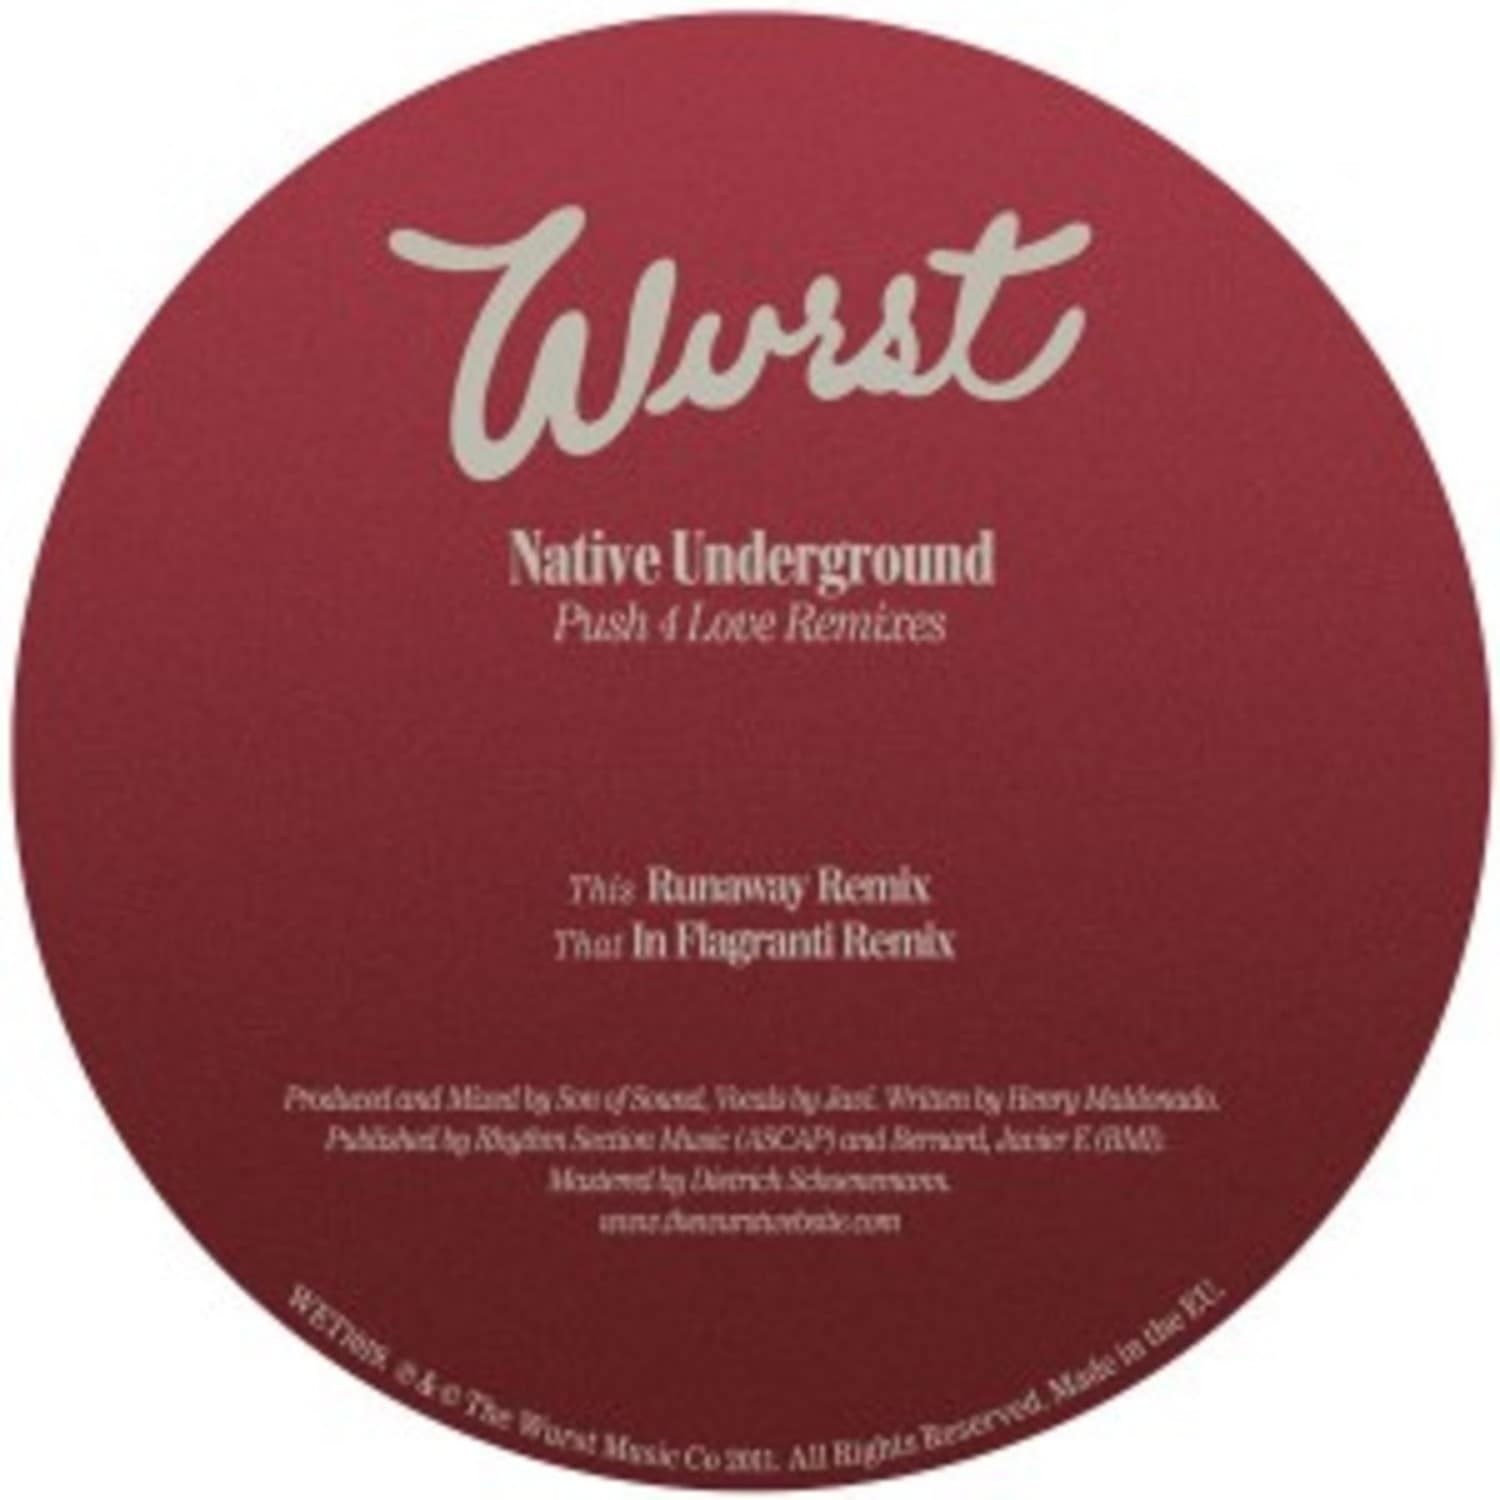 Native Underground - PUSH 4 LOVE REMIXES